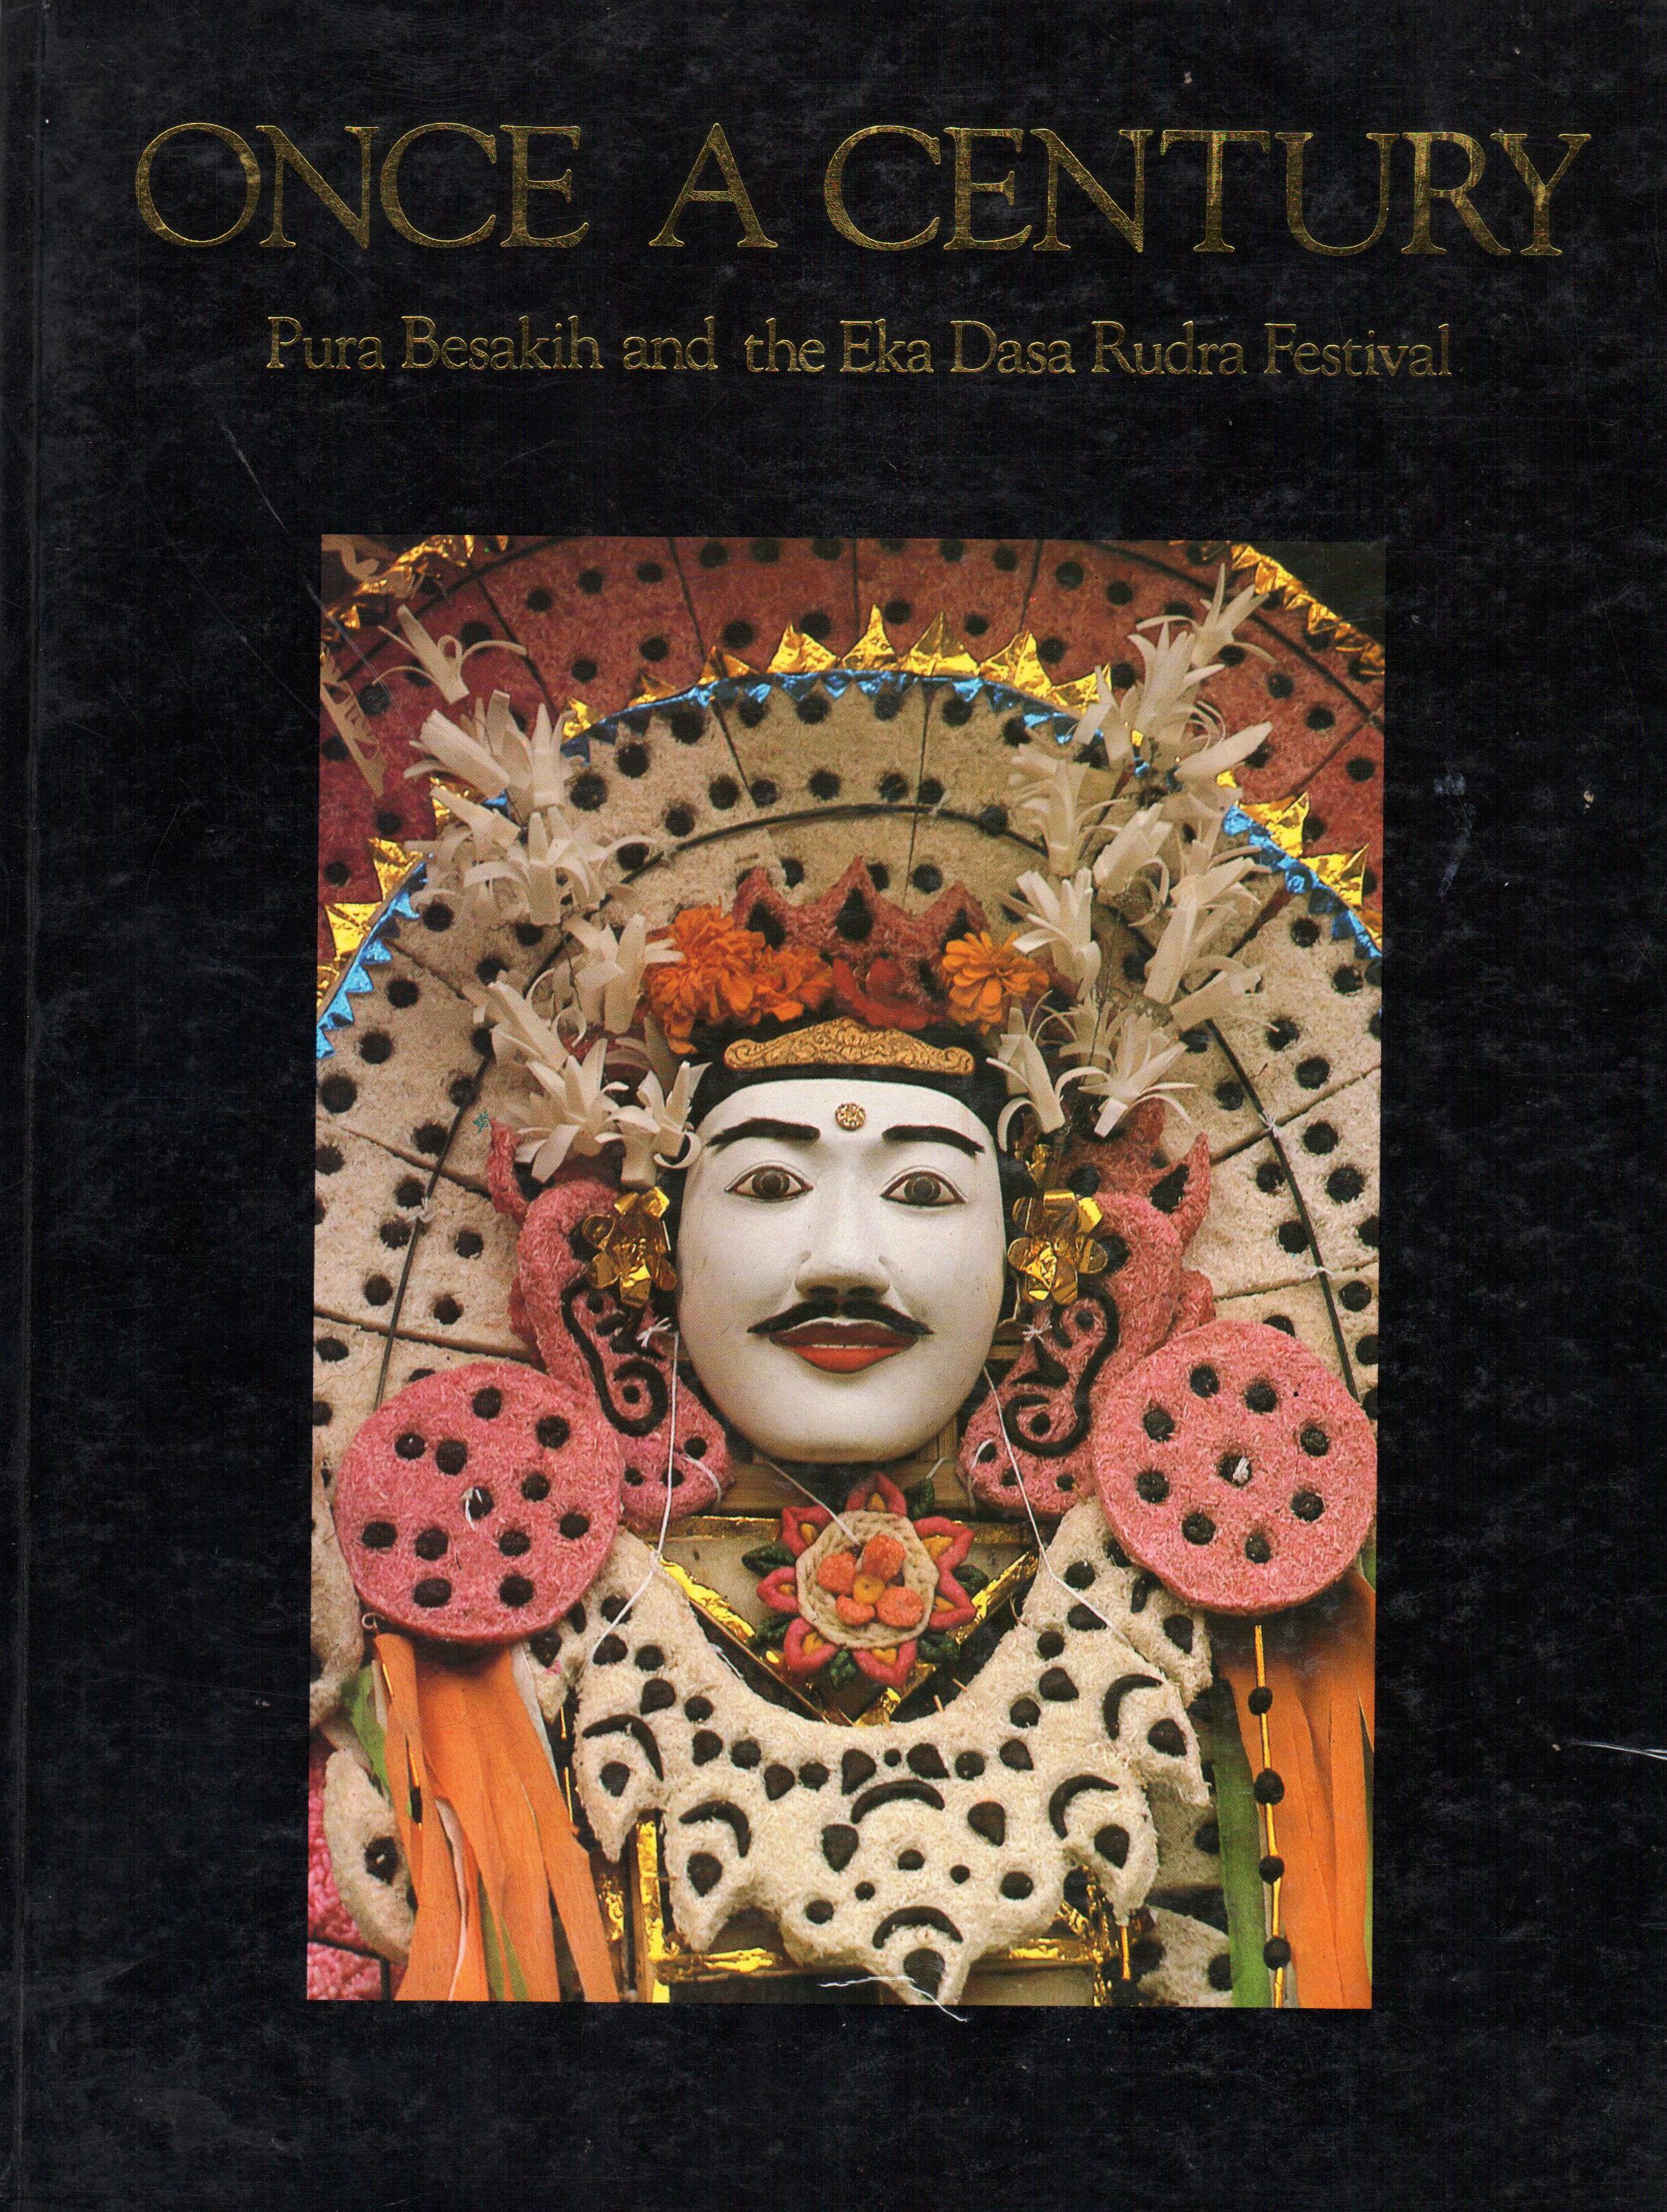 Once a century :  pura besakih and the eka dasa rudra festival